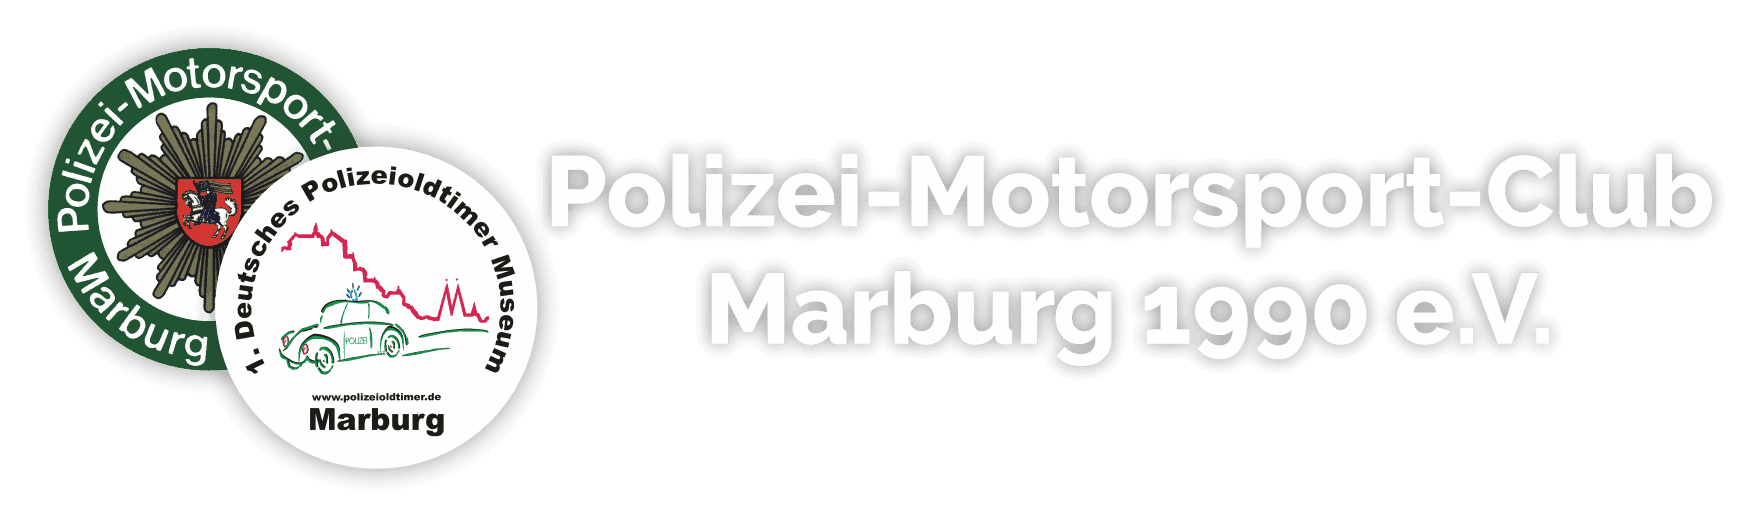 Polizei-Motorsport-Club Marburg 1990 e.V.